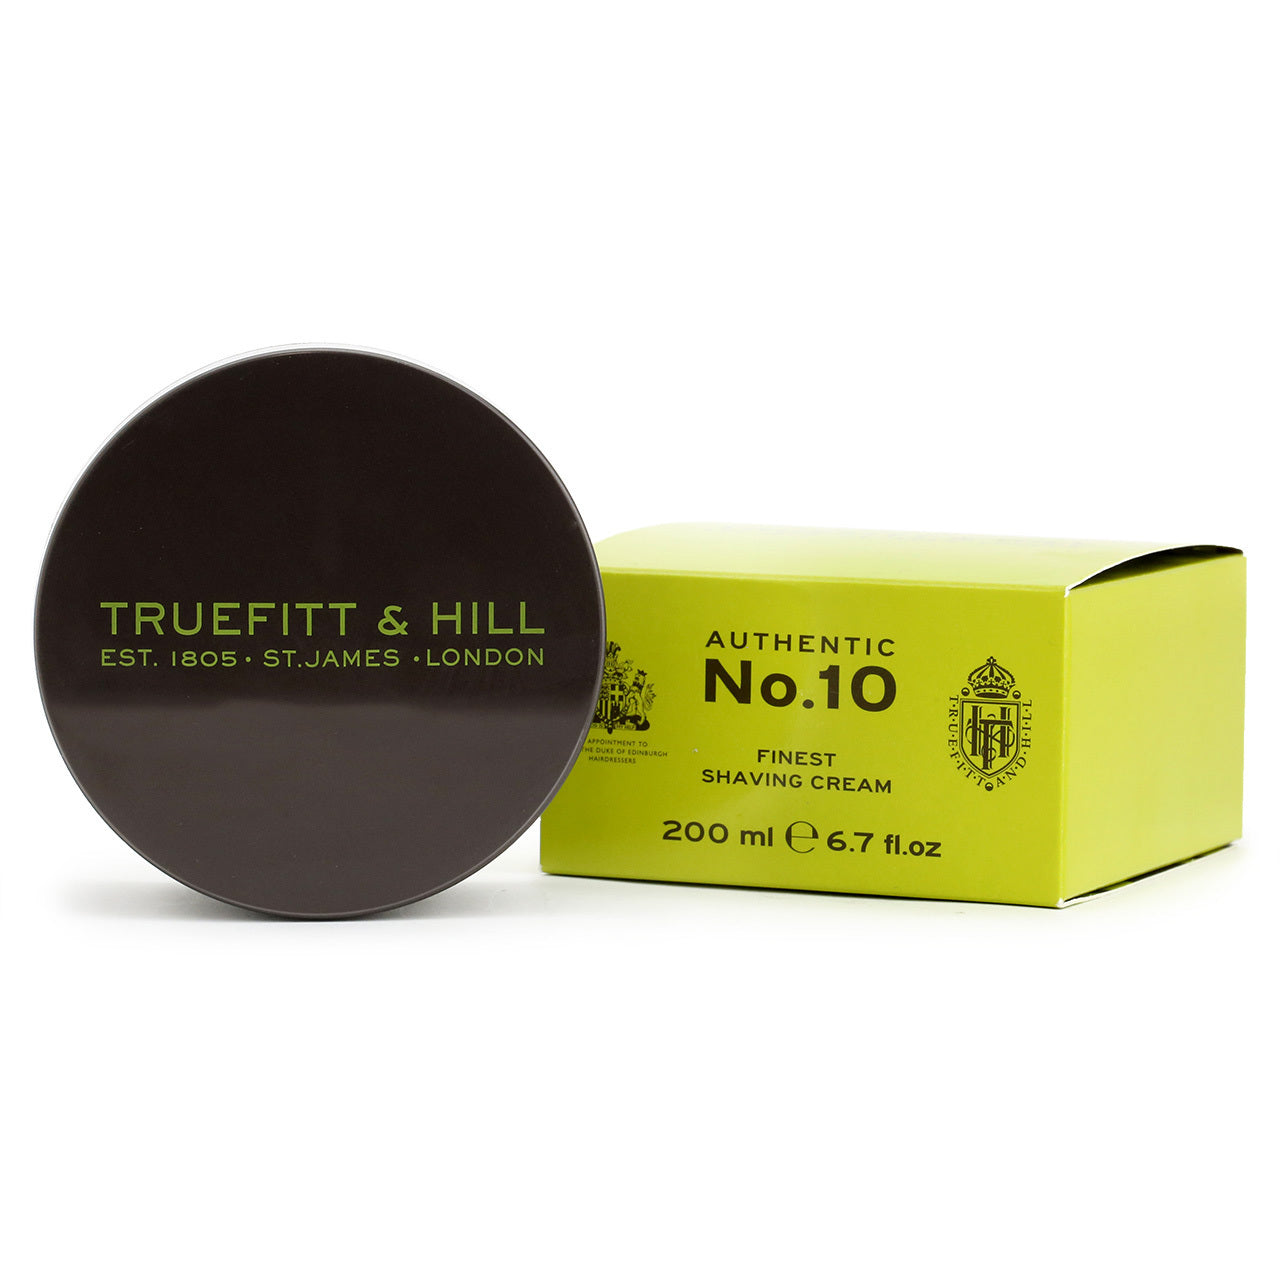 Truefitt & Hill Authentic No 10 Finest Shaving cream, 200ml tub and box